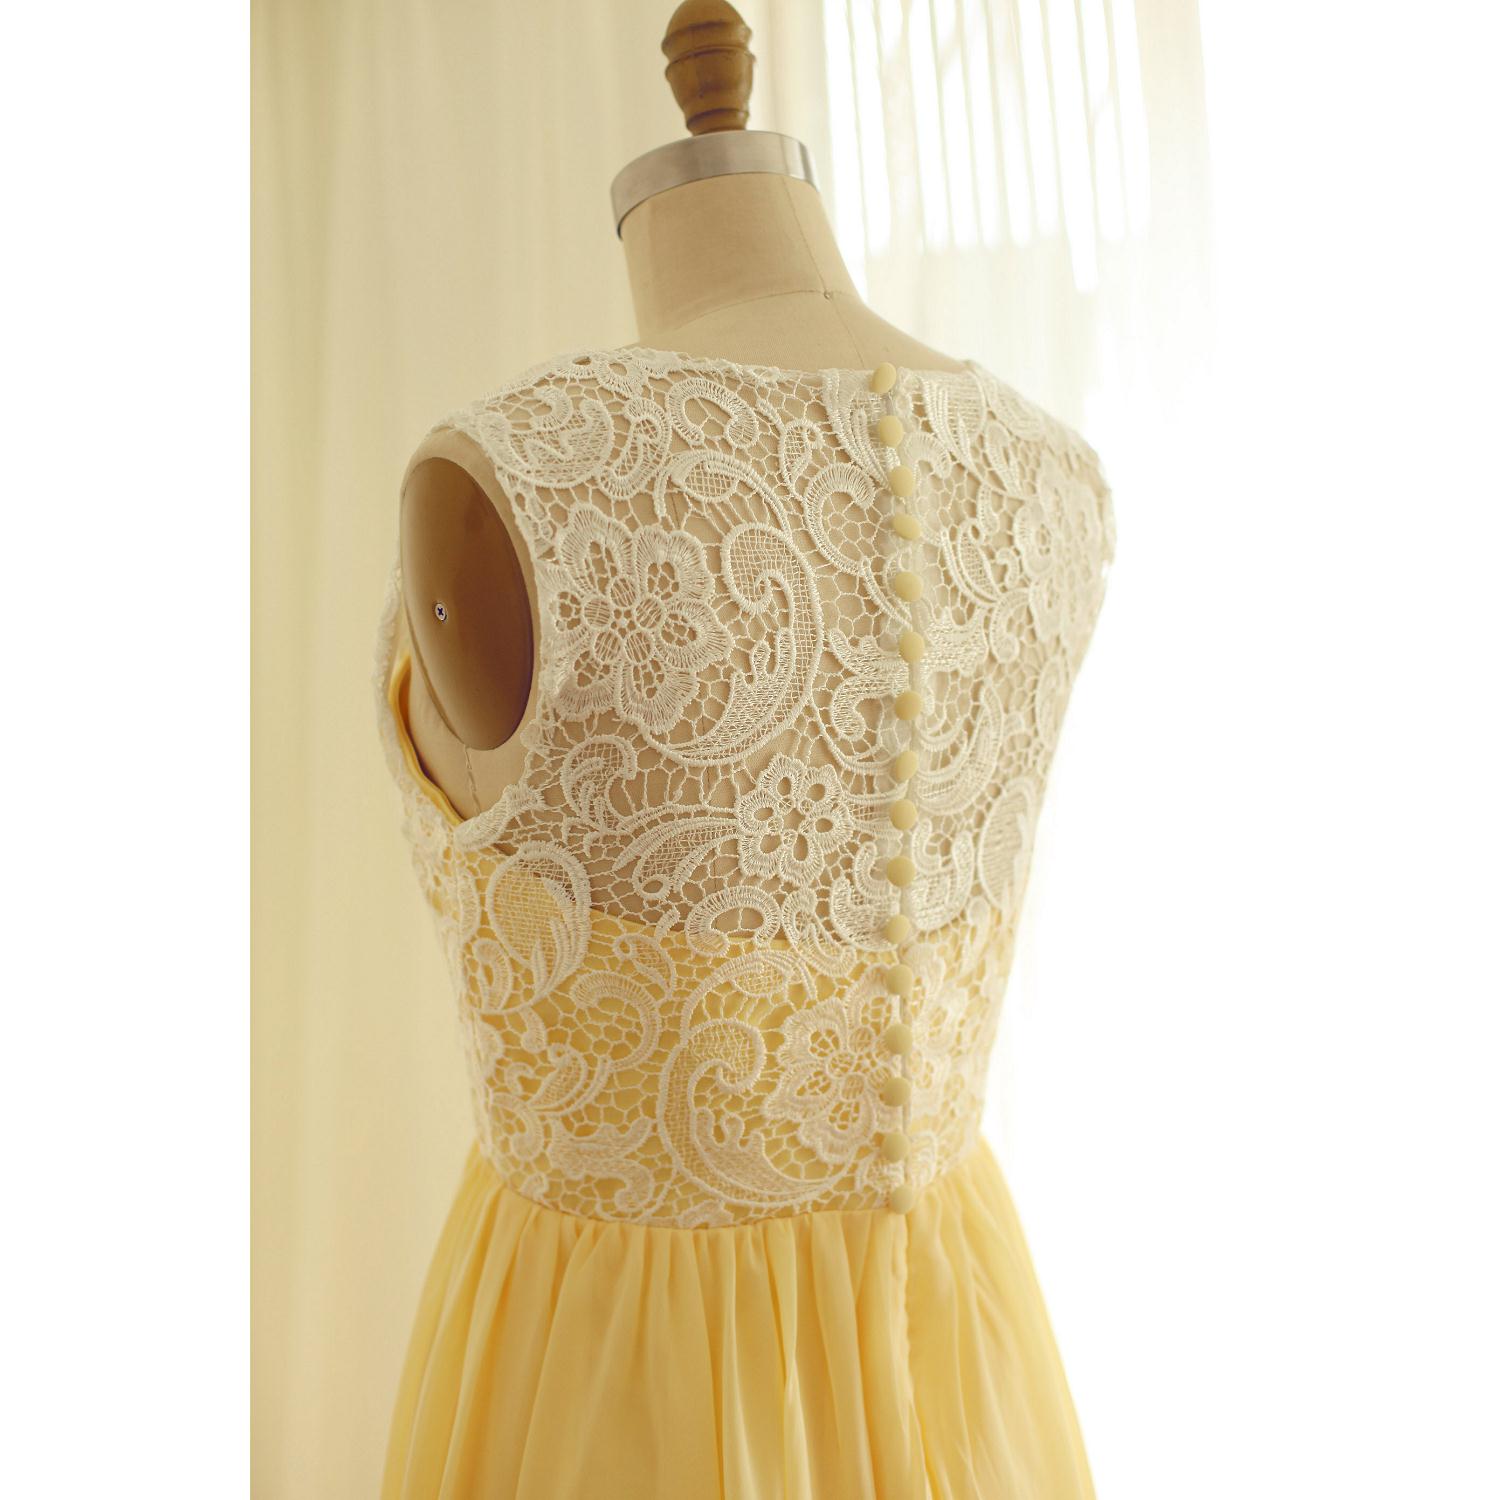 Chiffon and Lace Yellow Bridesmaid Dress, Charming Handmade Formal Dress